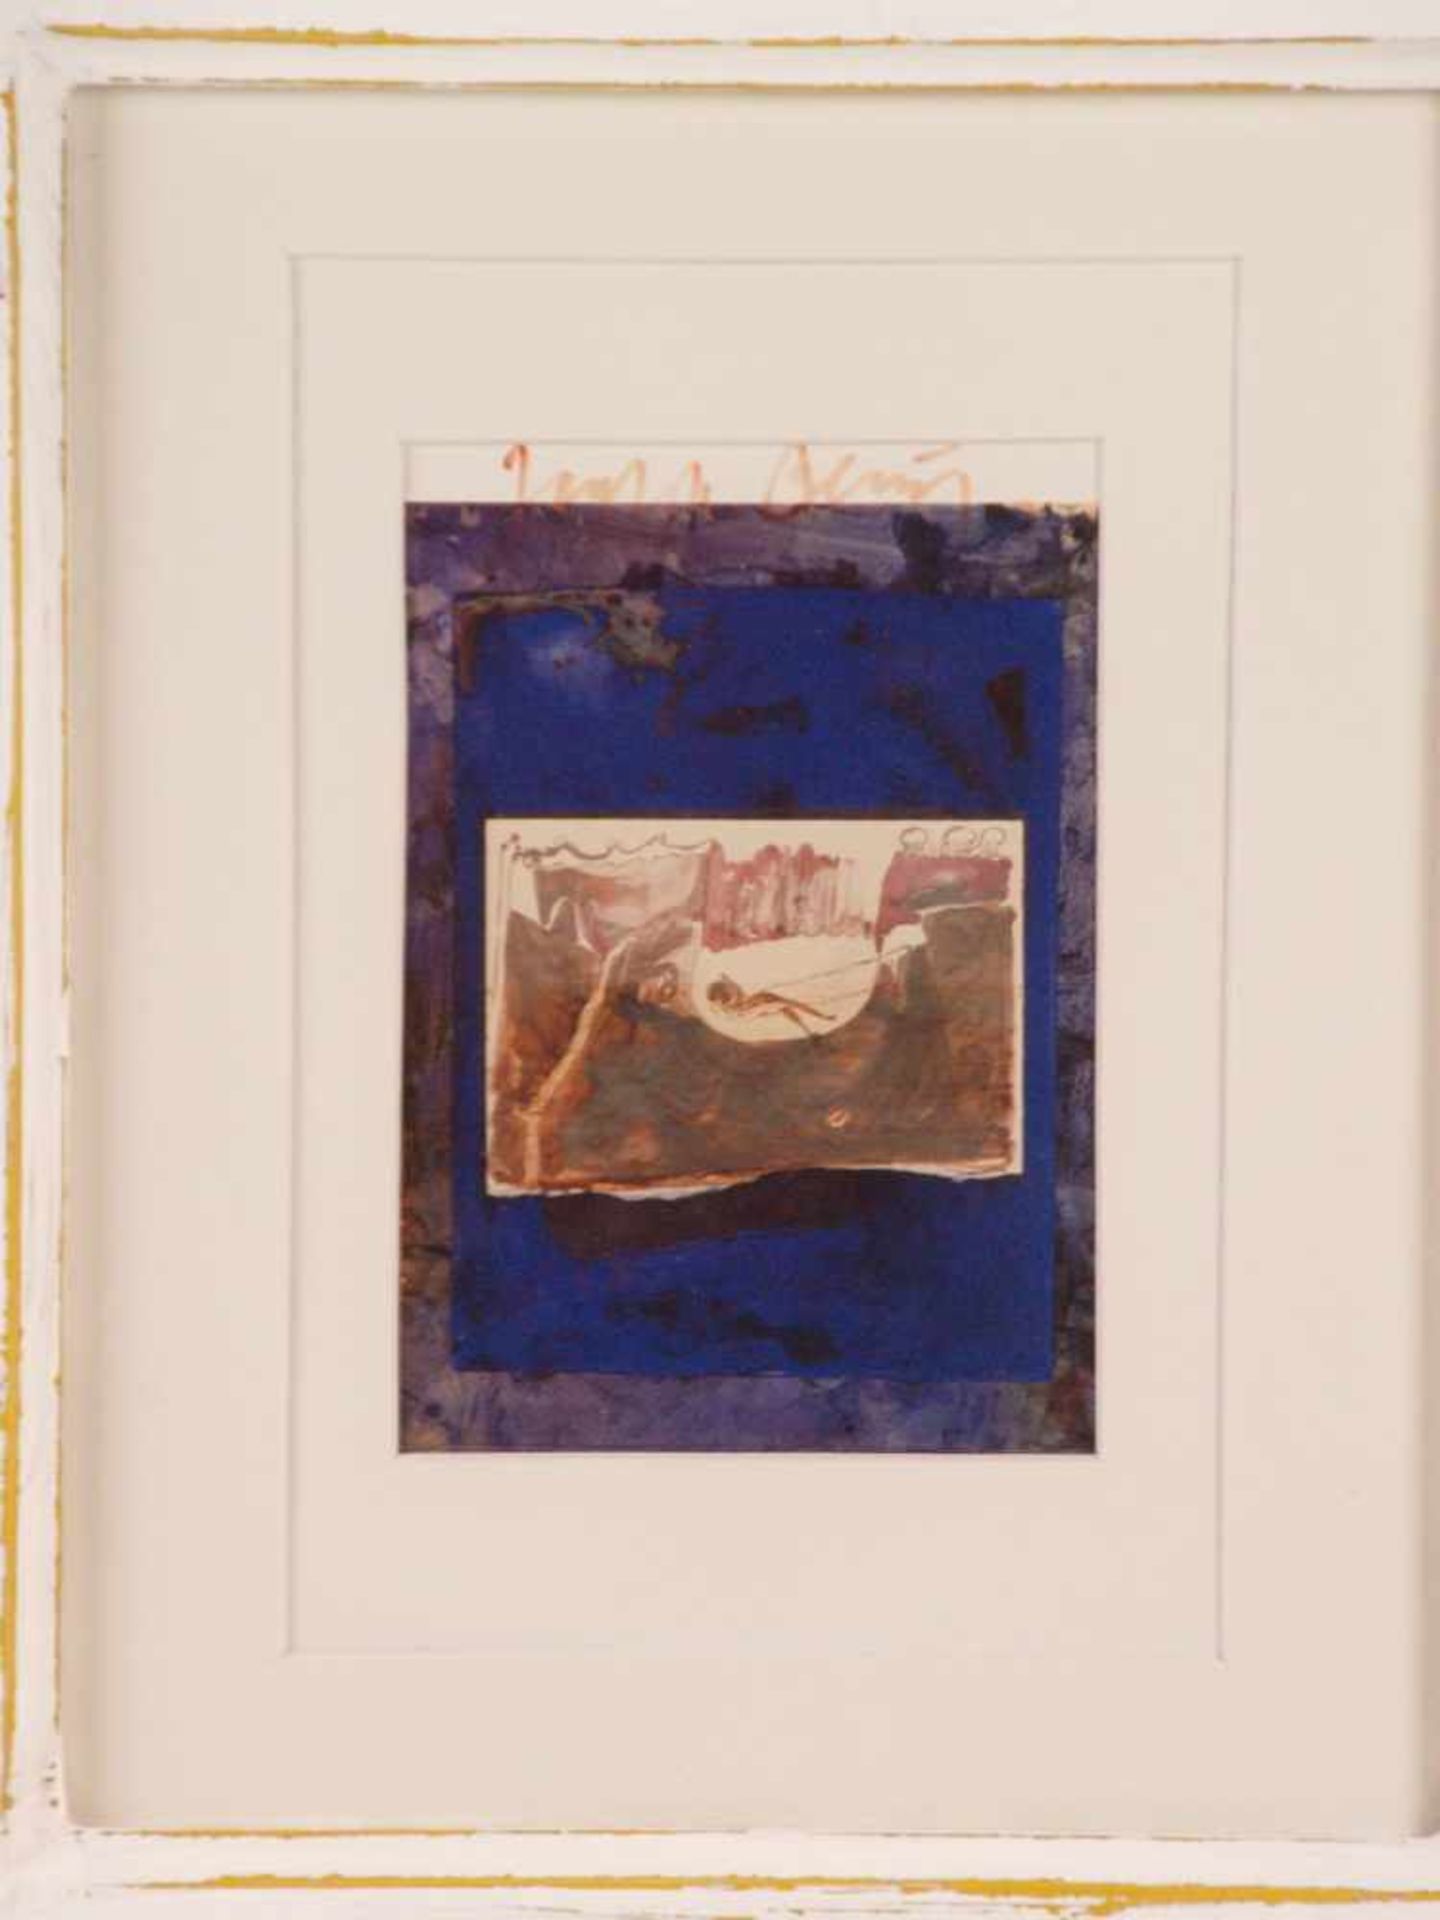 Beuys, Joseph (1921 Krefeld - 1986 Düsseldorf) - "Before birth", 1950, Multiple, oben